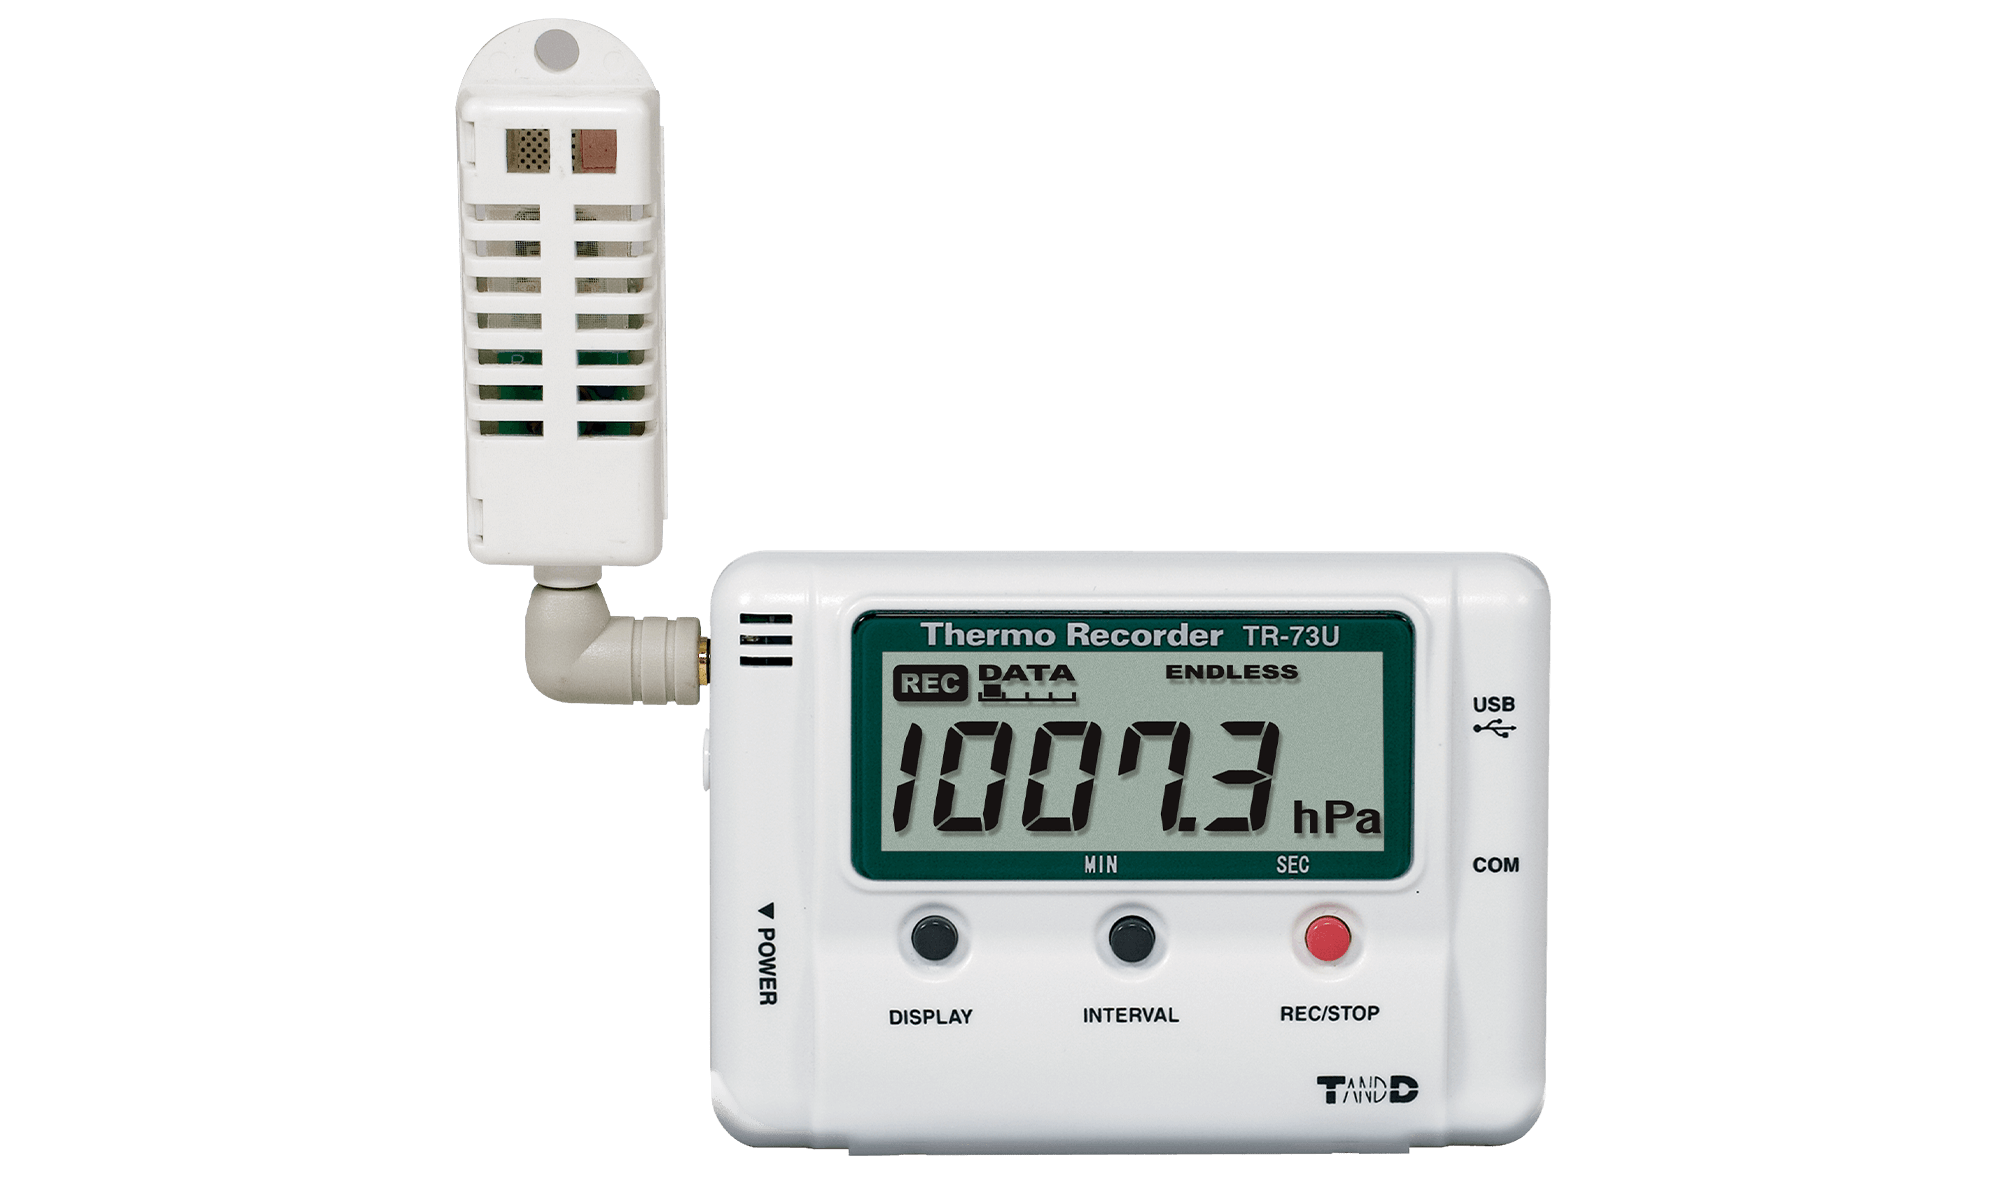 tandd進口USB 連接氣壓記錄儀 1100 hPa 的溫度、濕度和氣壓TR-73U